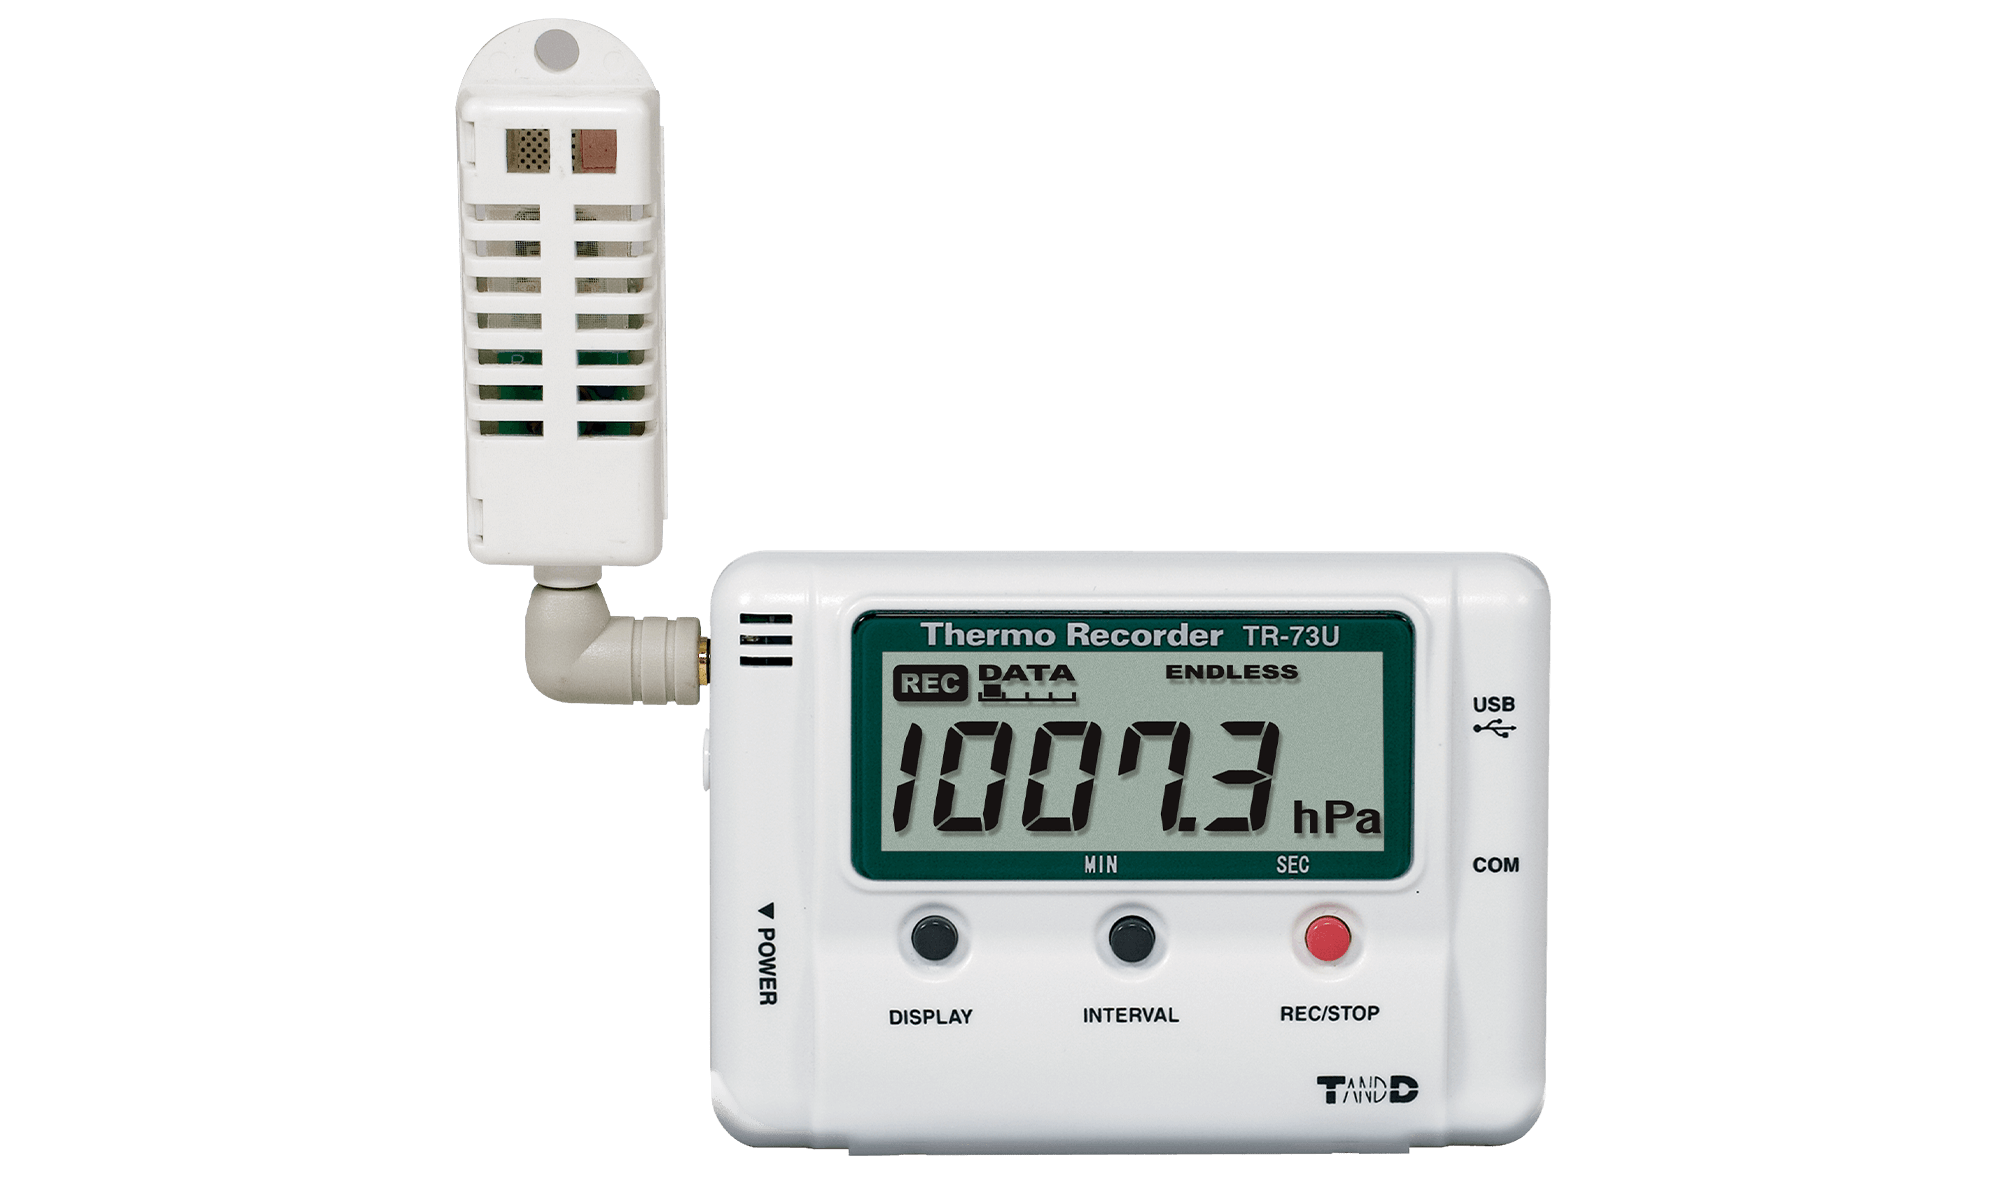 tandd進口USB 連接氣壓記錄儀 1100 hPa 的溫度、濕度和氣壓TR-73U